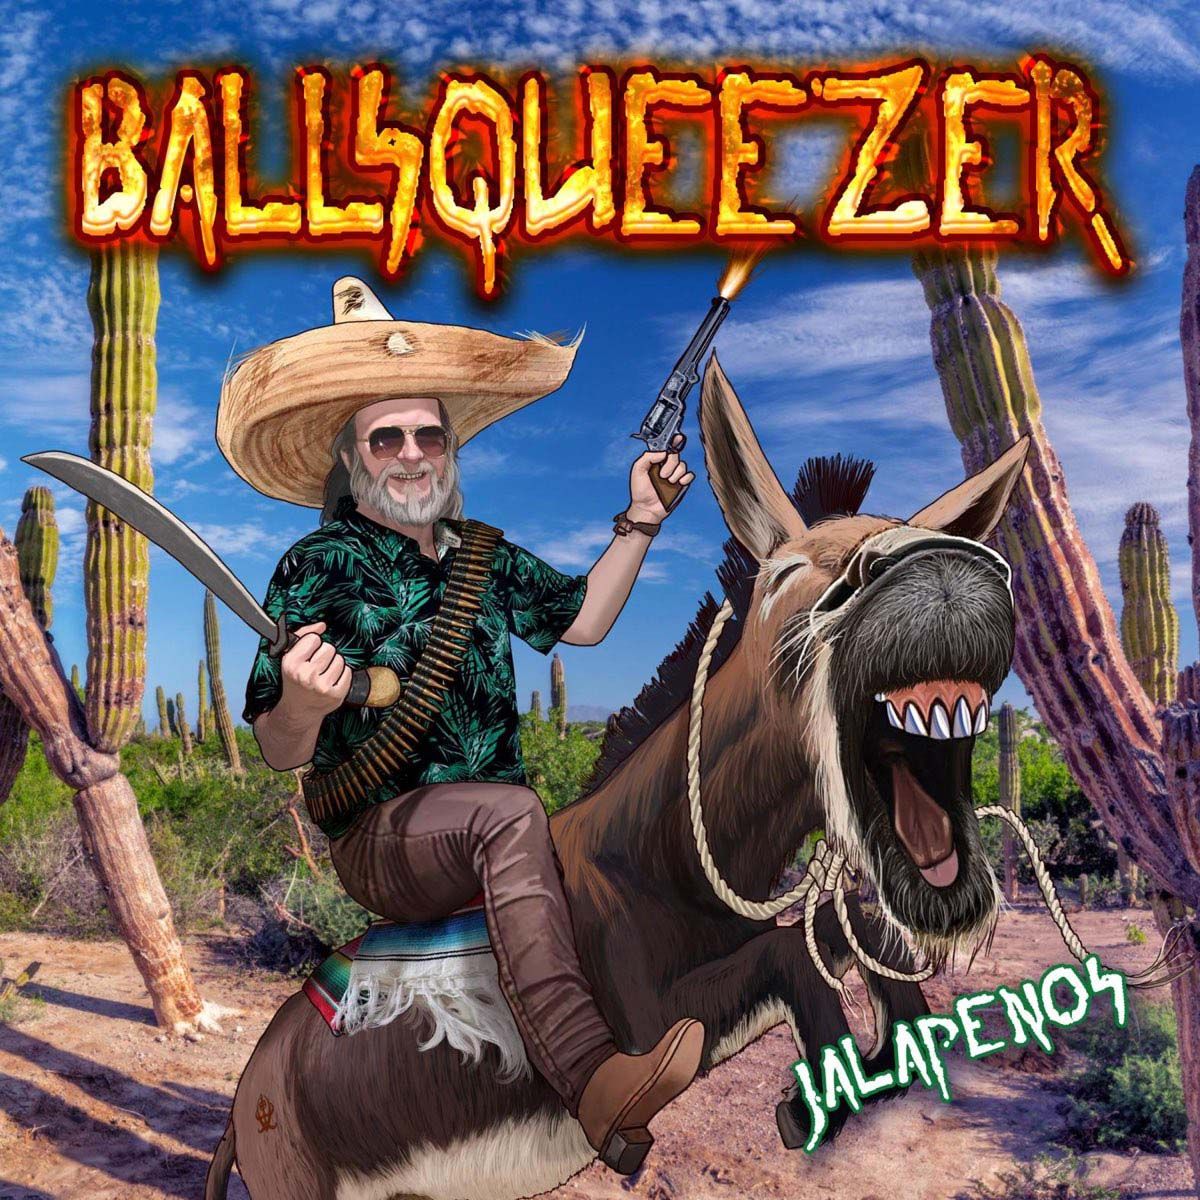 Ballsqueezer - Jalapenos